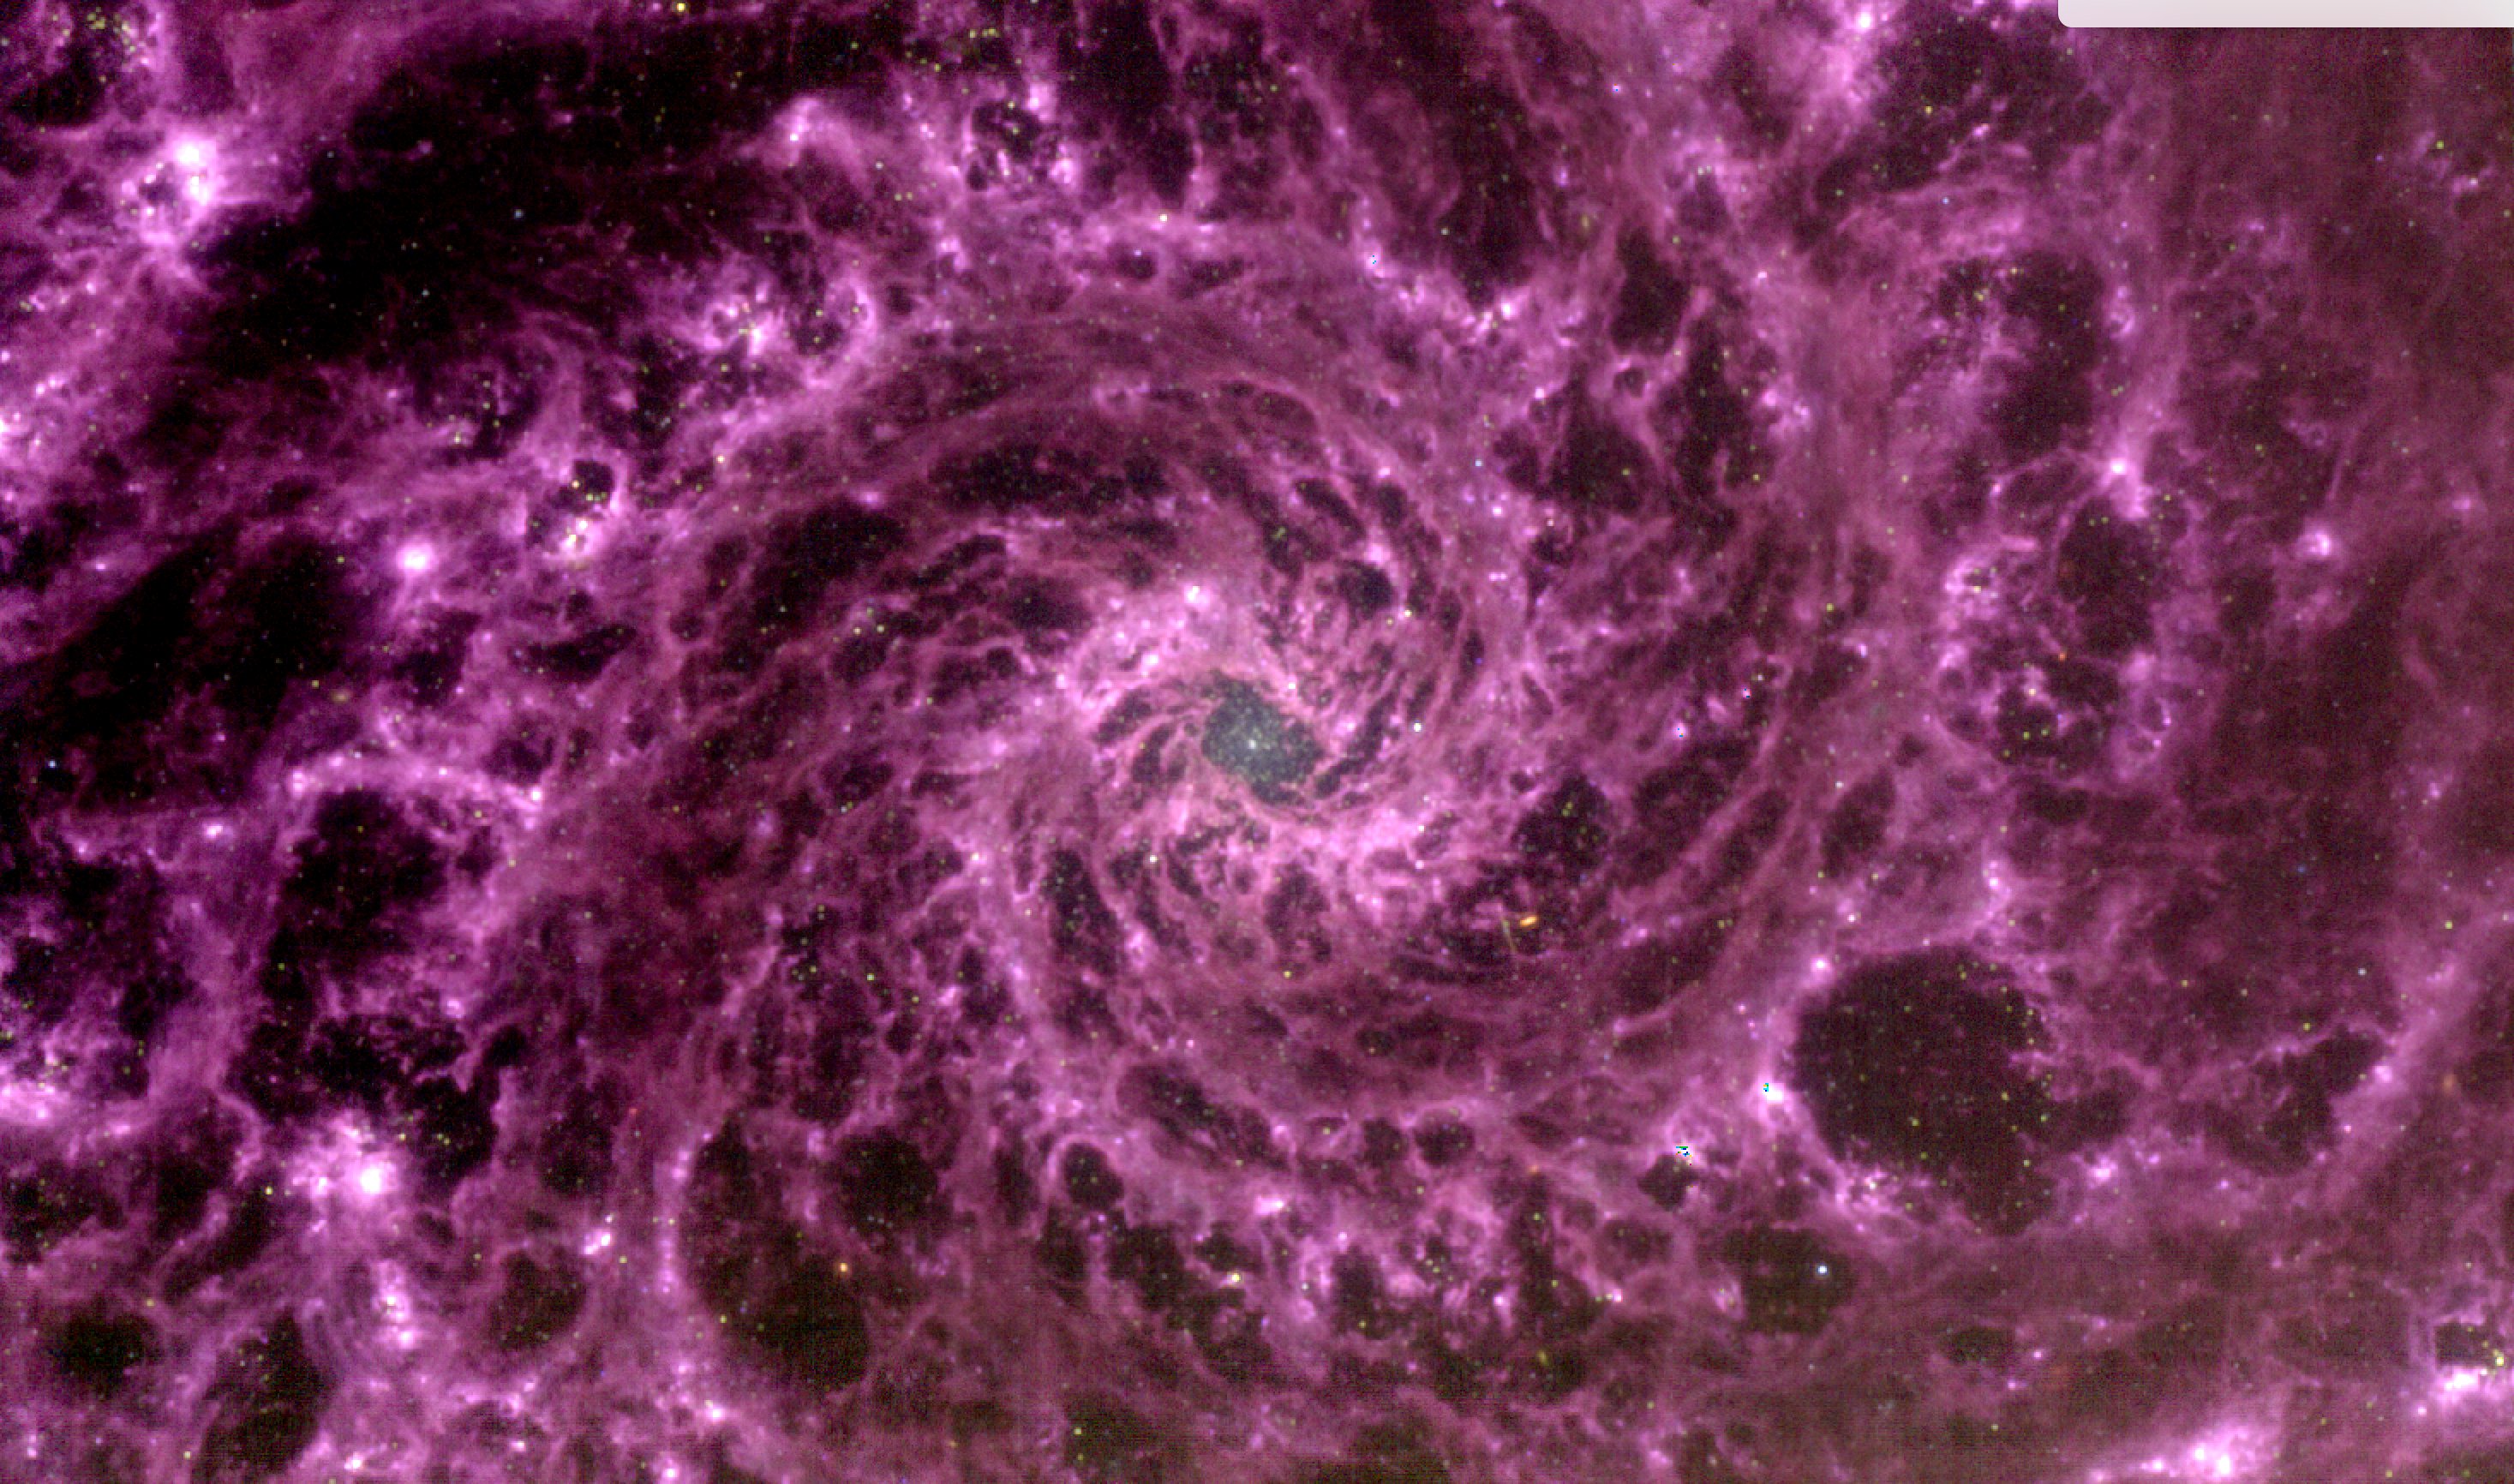 NASA's James Webb telescope discovered a purple galactic swirl which looks like a multiverse portal